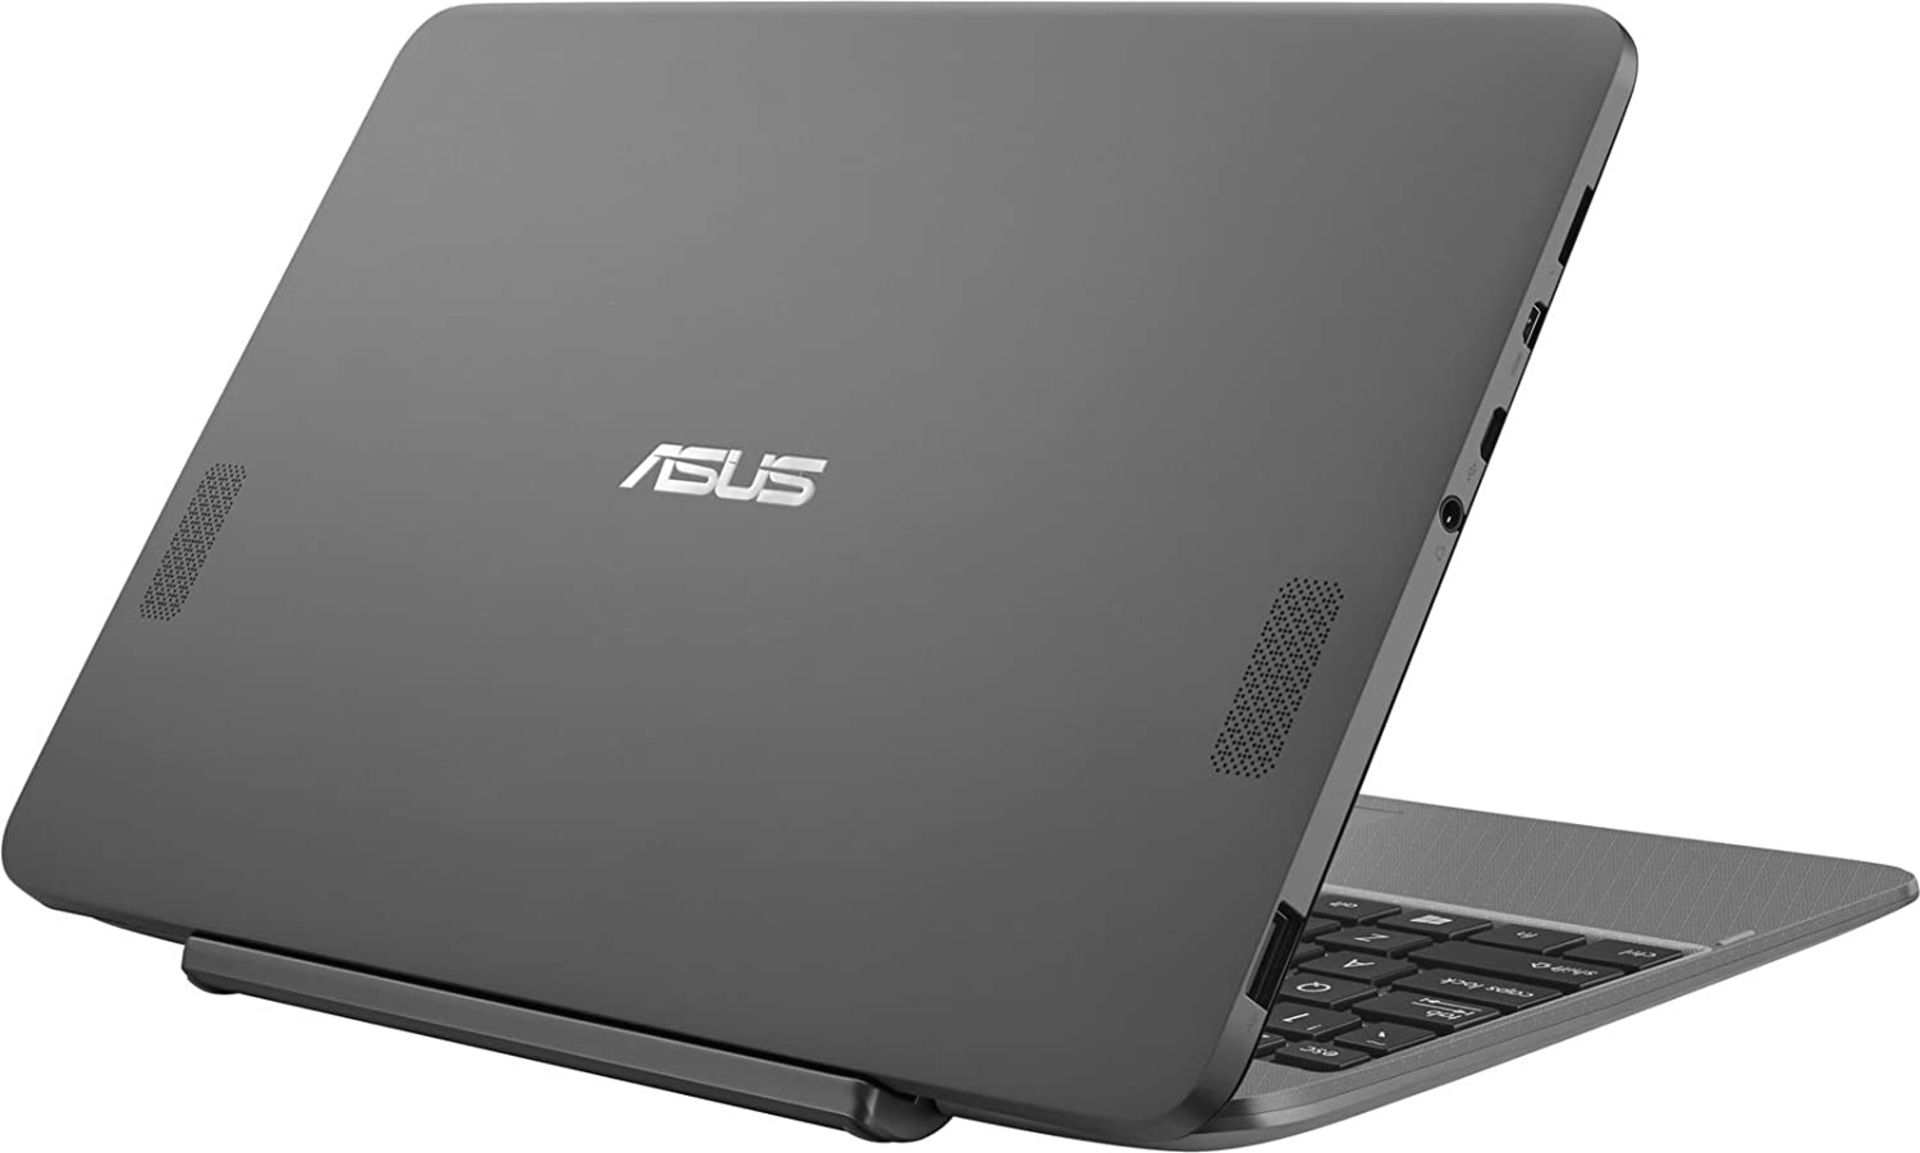 (5) 1 x Grade B - Asus Transformer Book T101HA (10.1 inch) Notebook PC Atom (Z8350) 2GB 32GB - Image 7 of 7